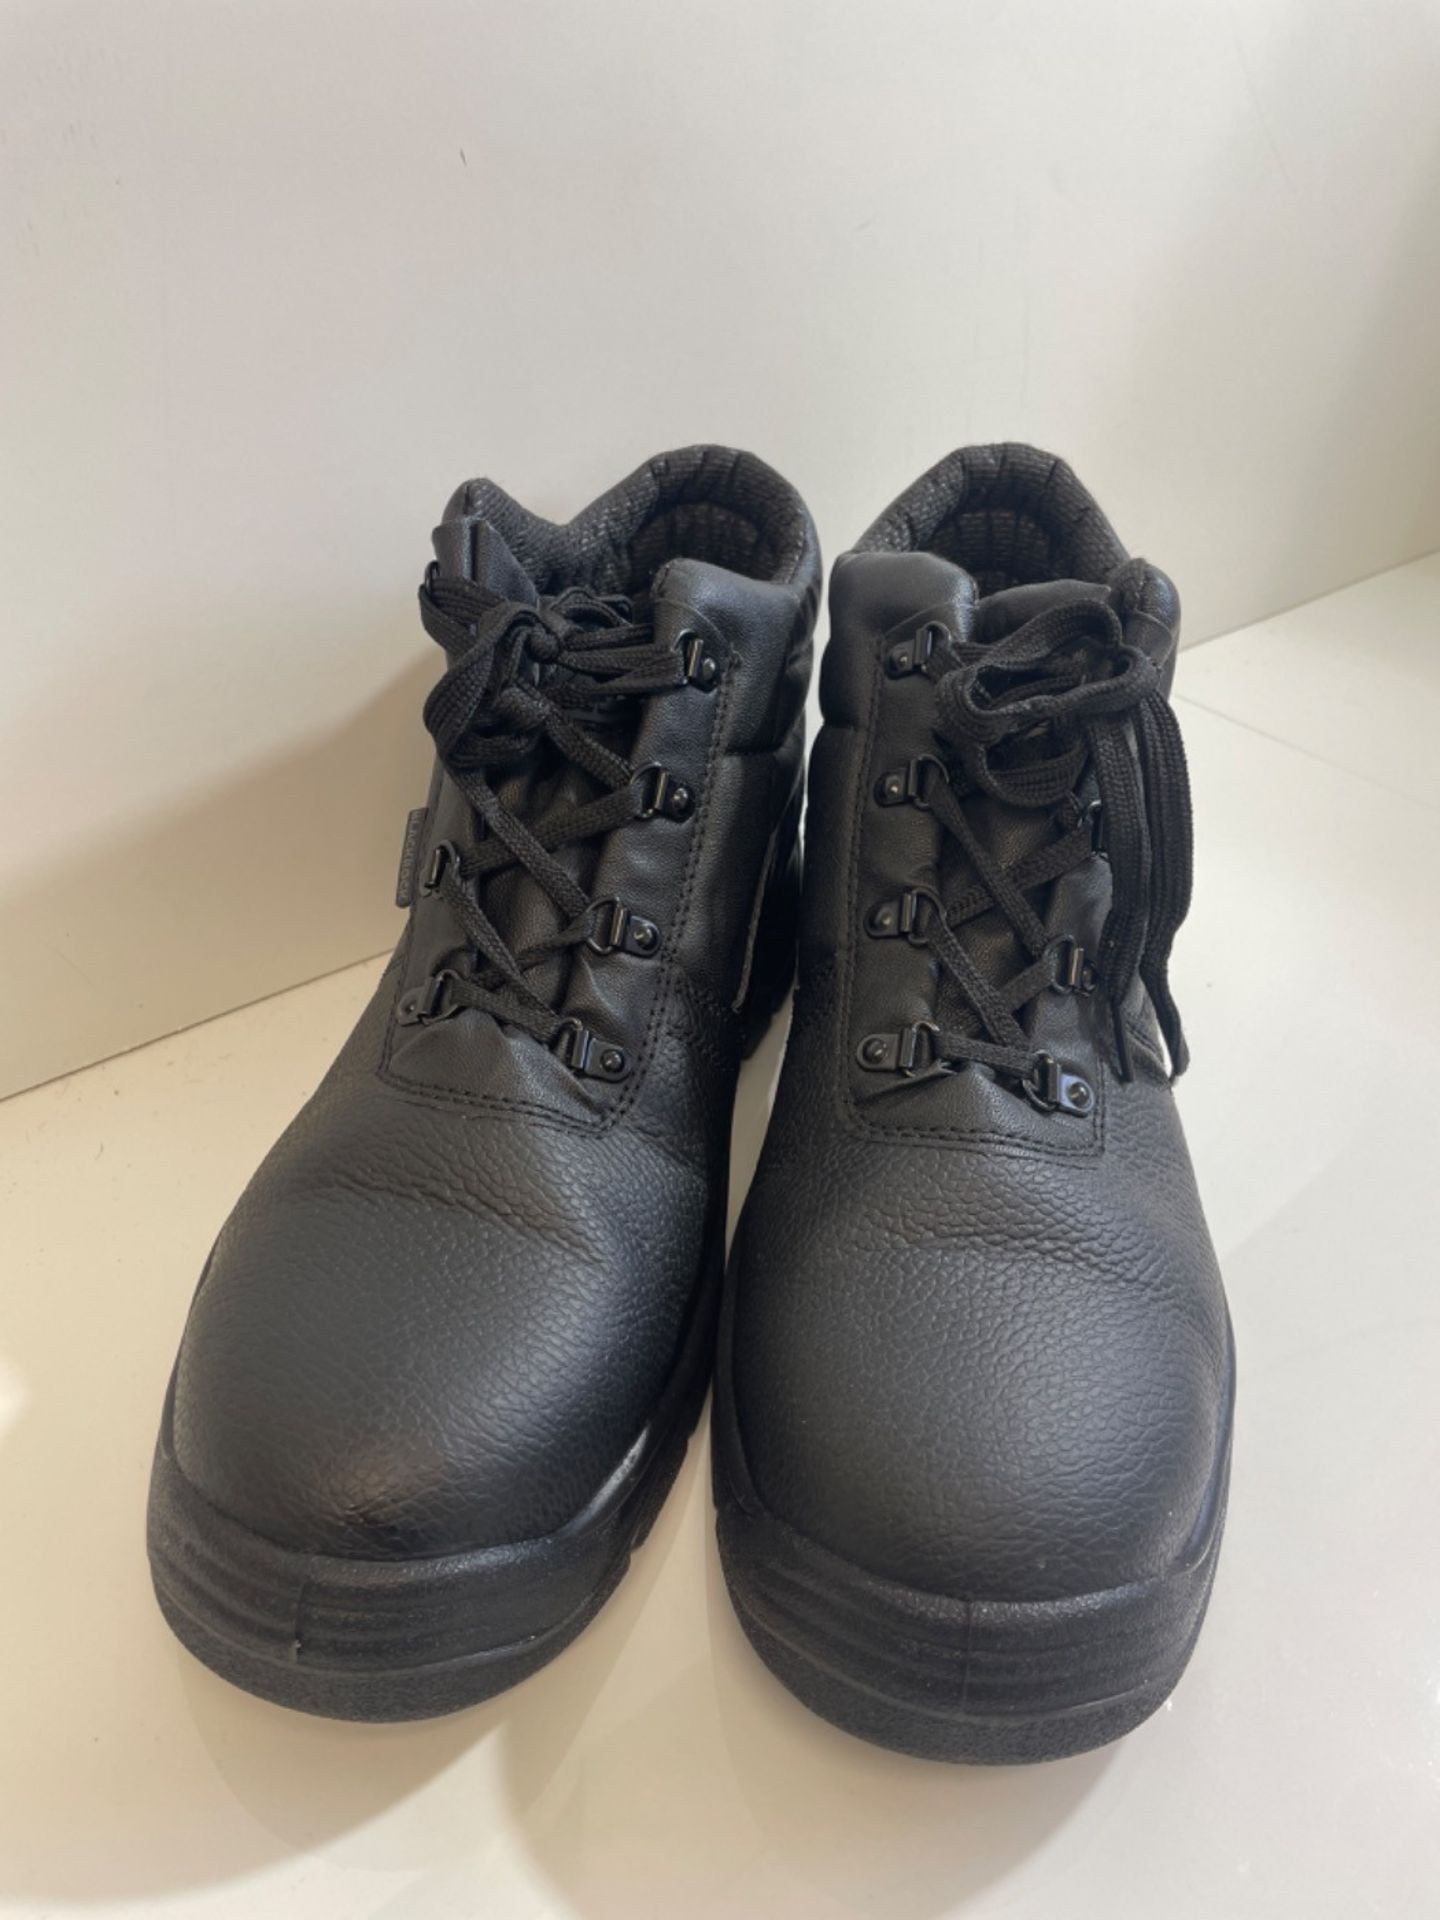 Blackrock SB-P SRC Safety Chukka Work Boots, Mens Womens Steel Toe Cap Black Leather, Walking Hiker - Image 3 of 3